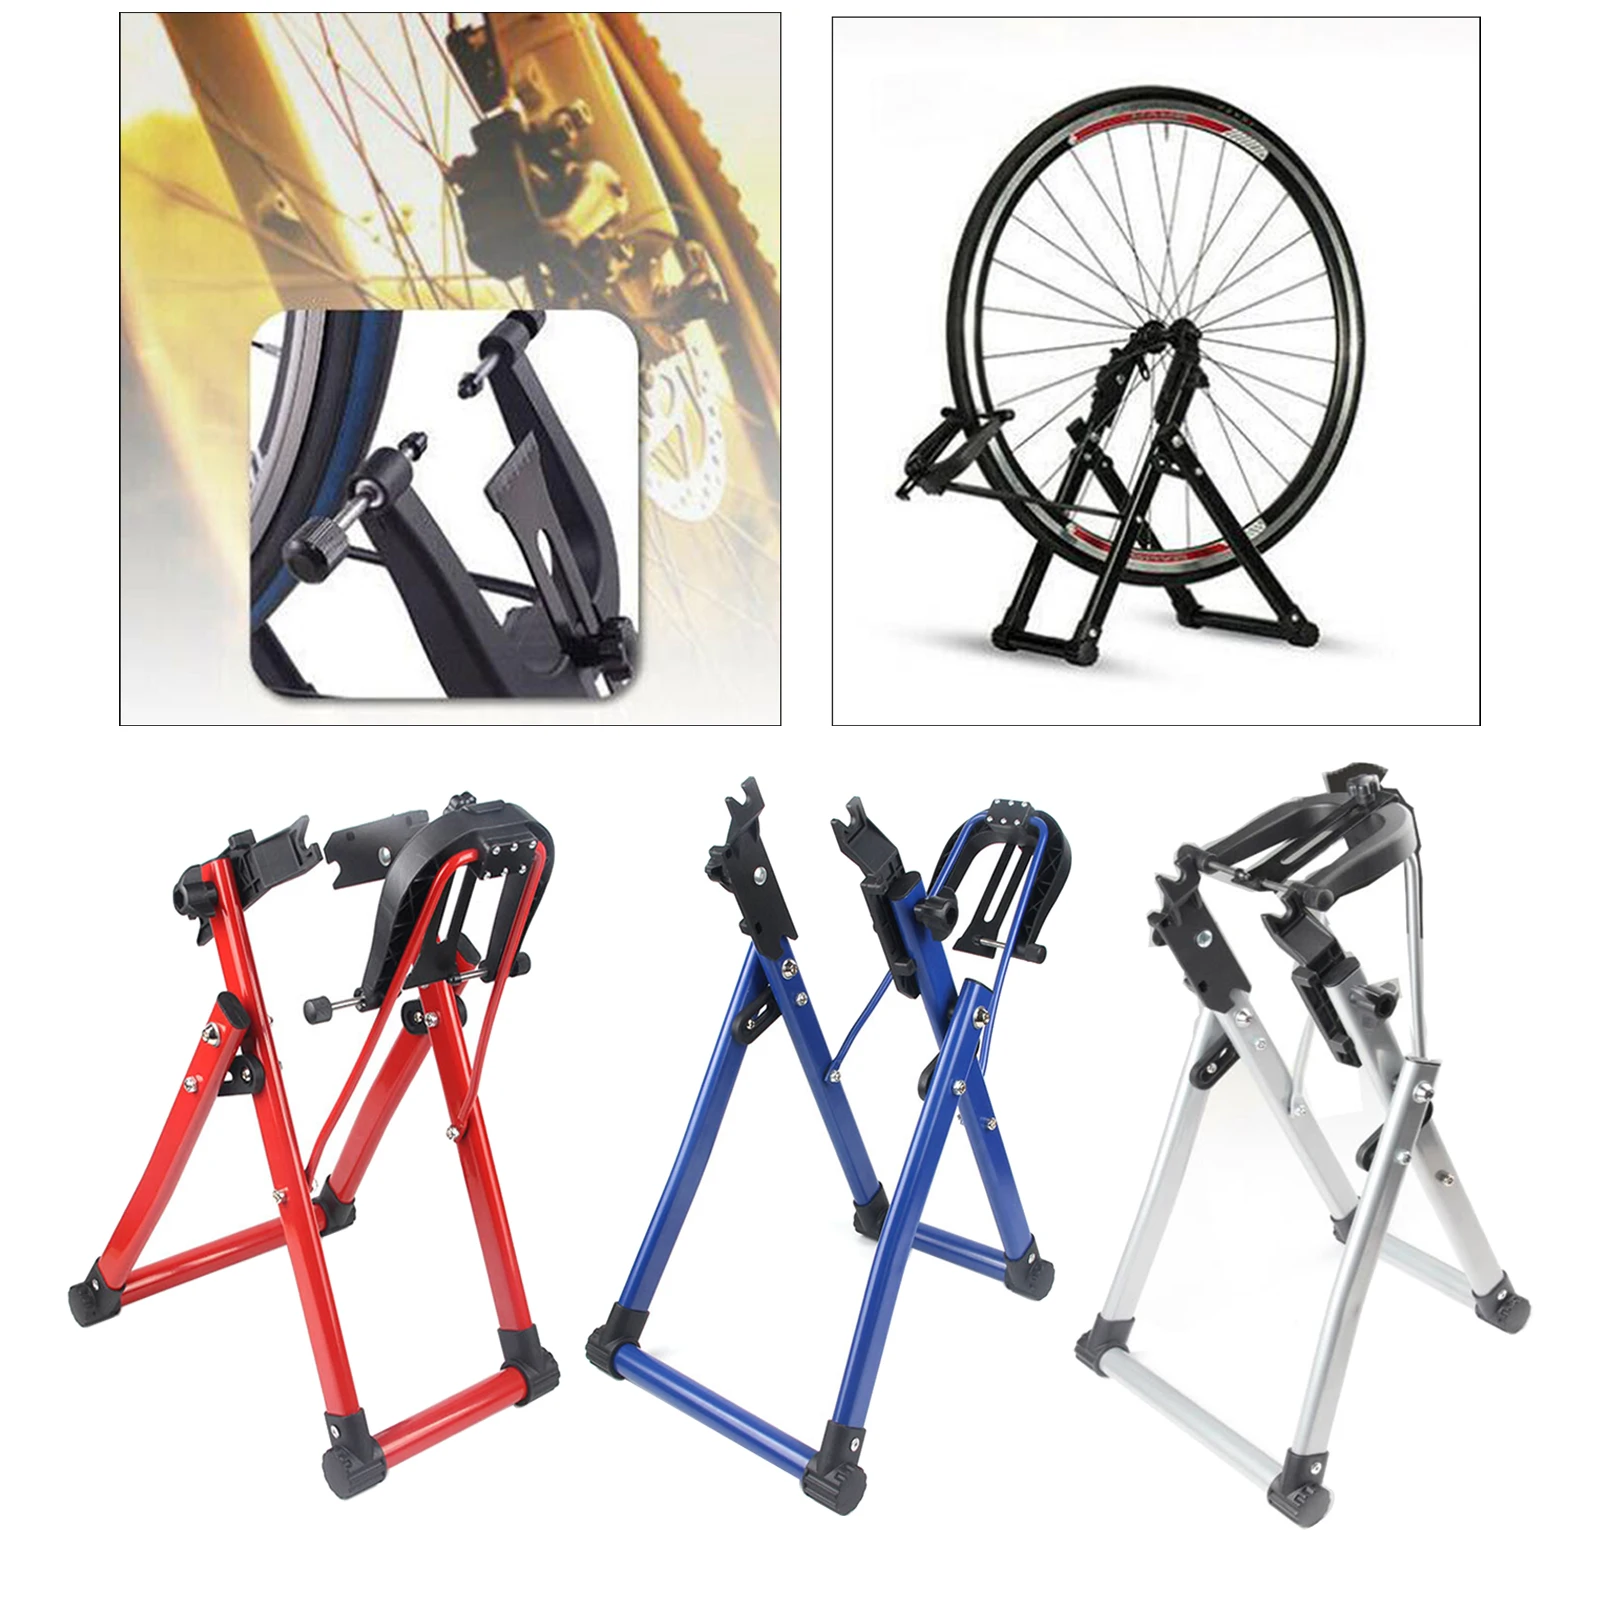 Bike Wheel Truing Stand Bicycle Wheel Maintenance Home Mechanic Truing Stand Fits 16